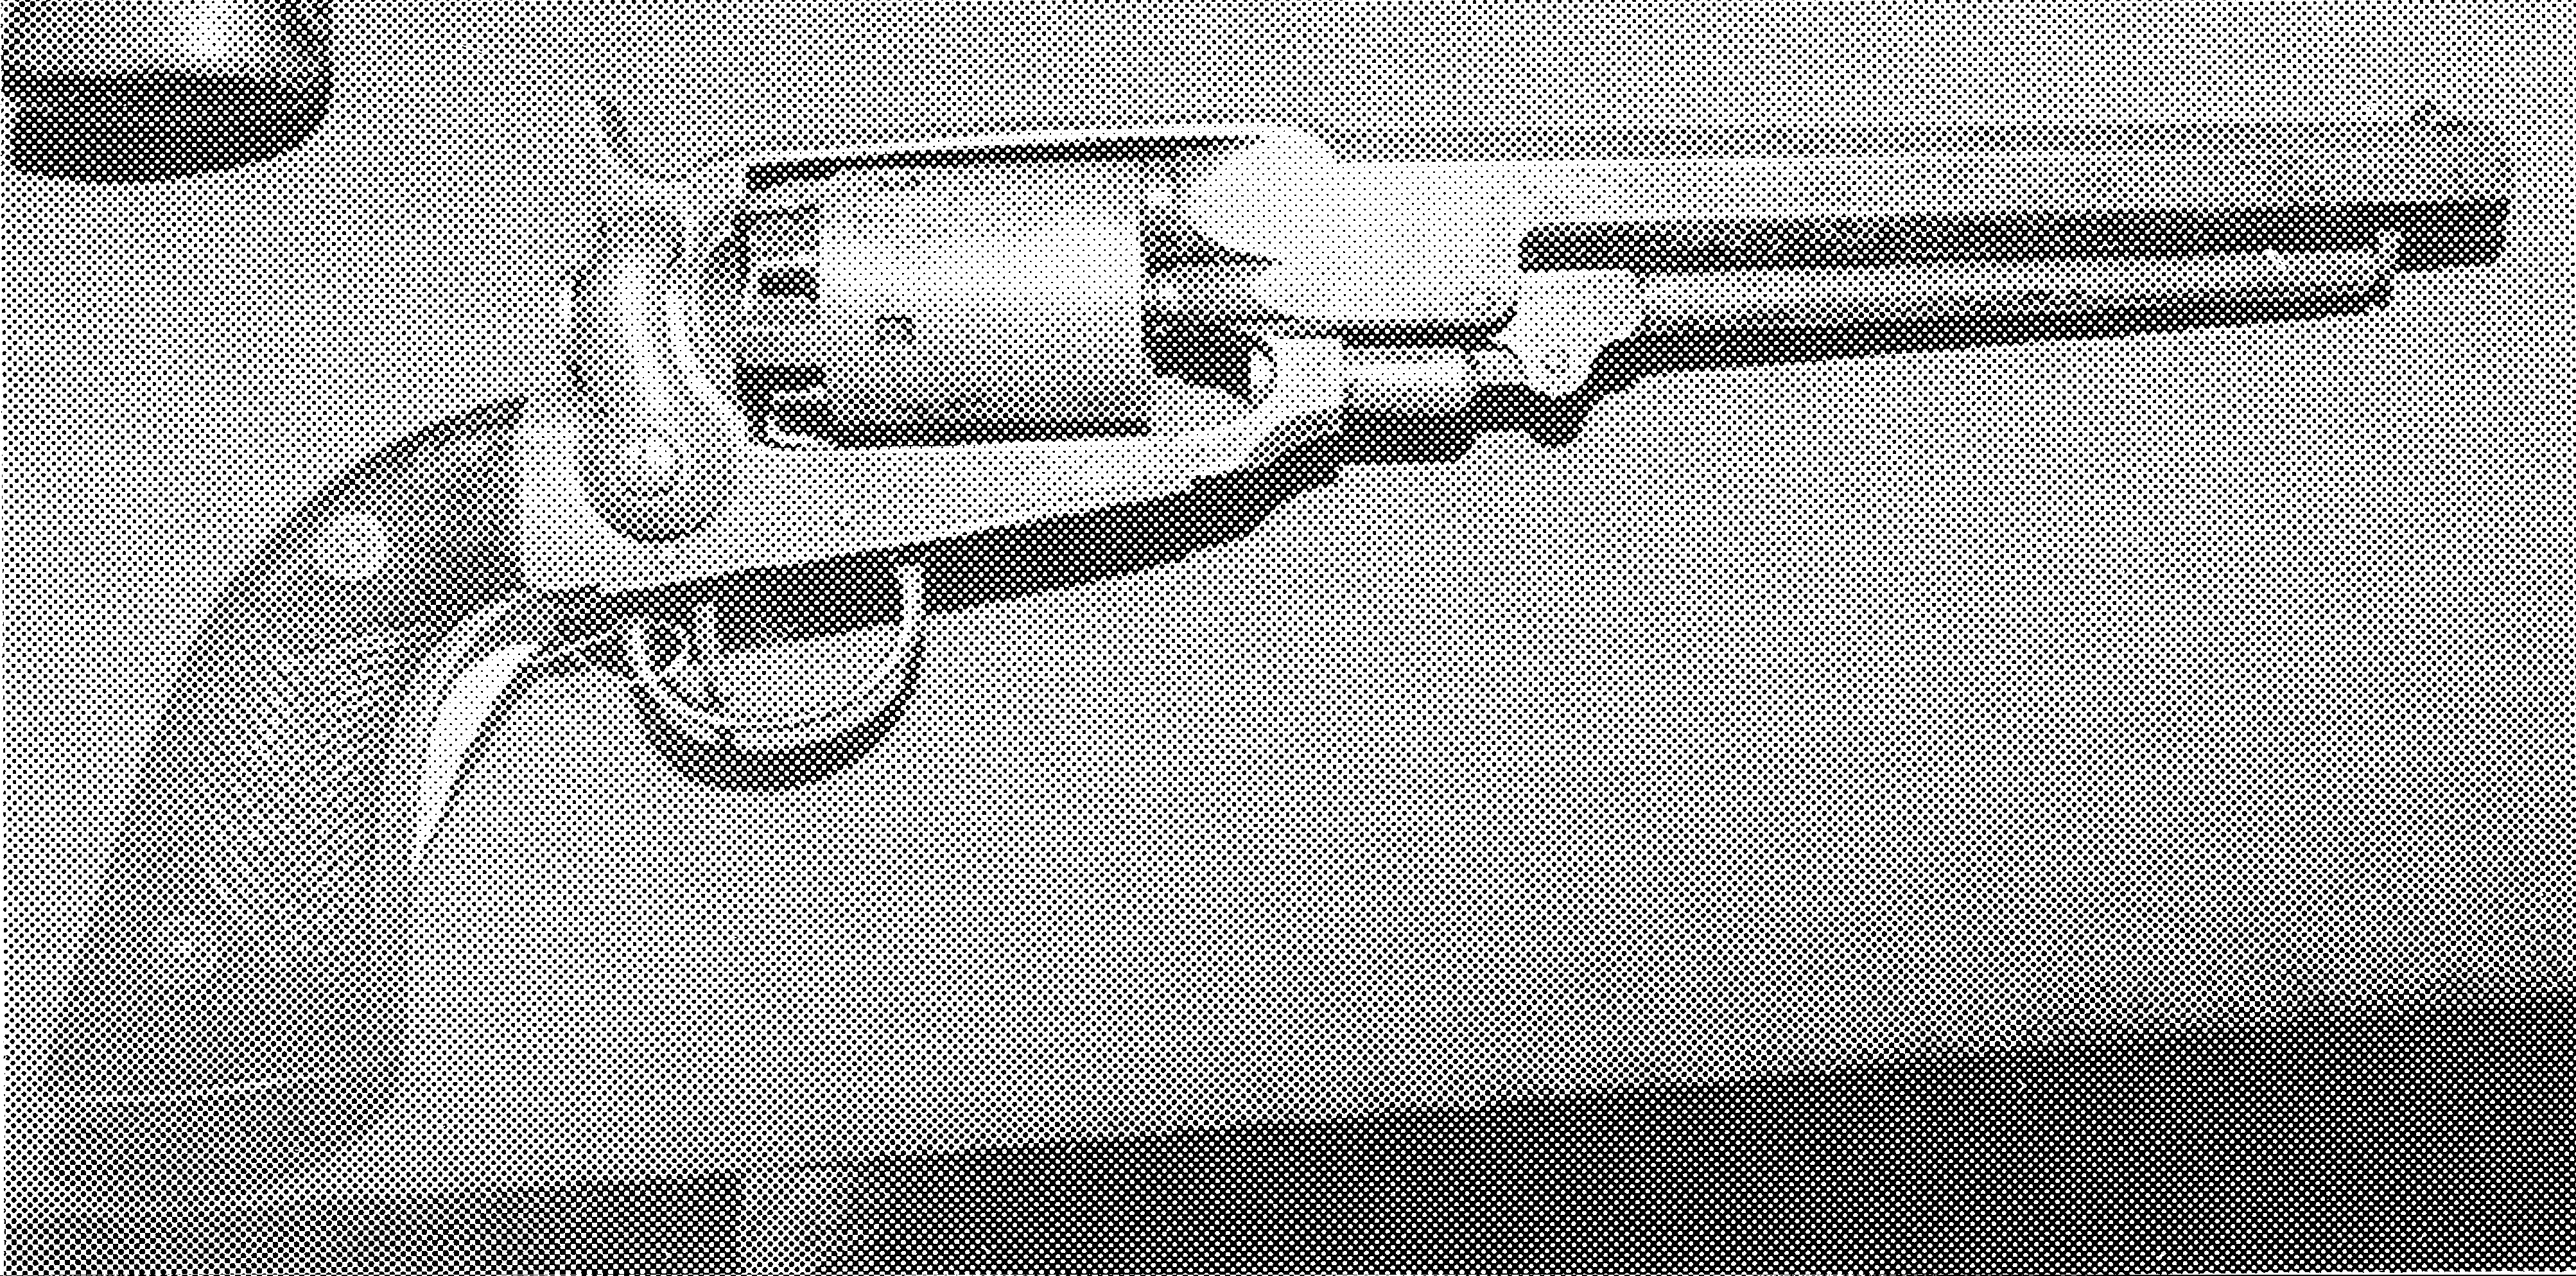 Army Model Revolver